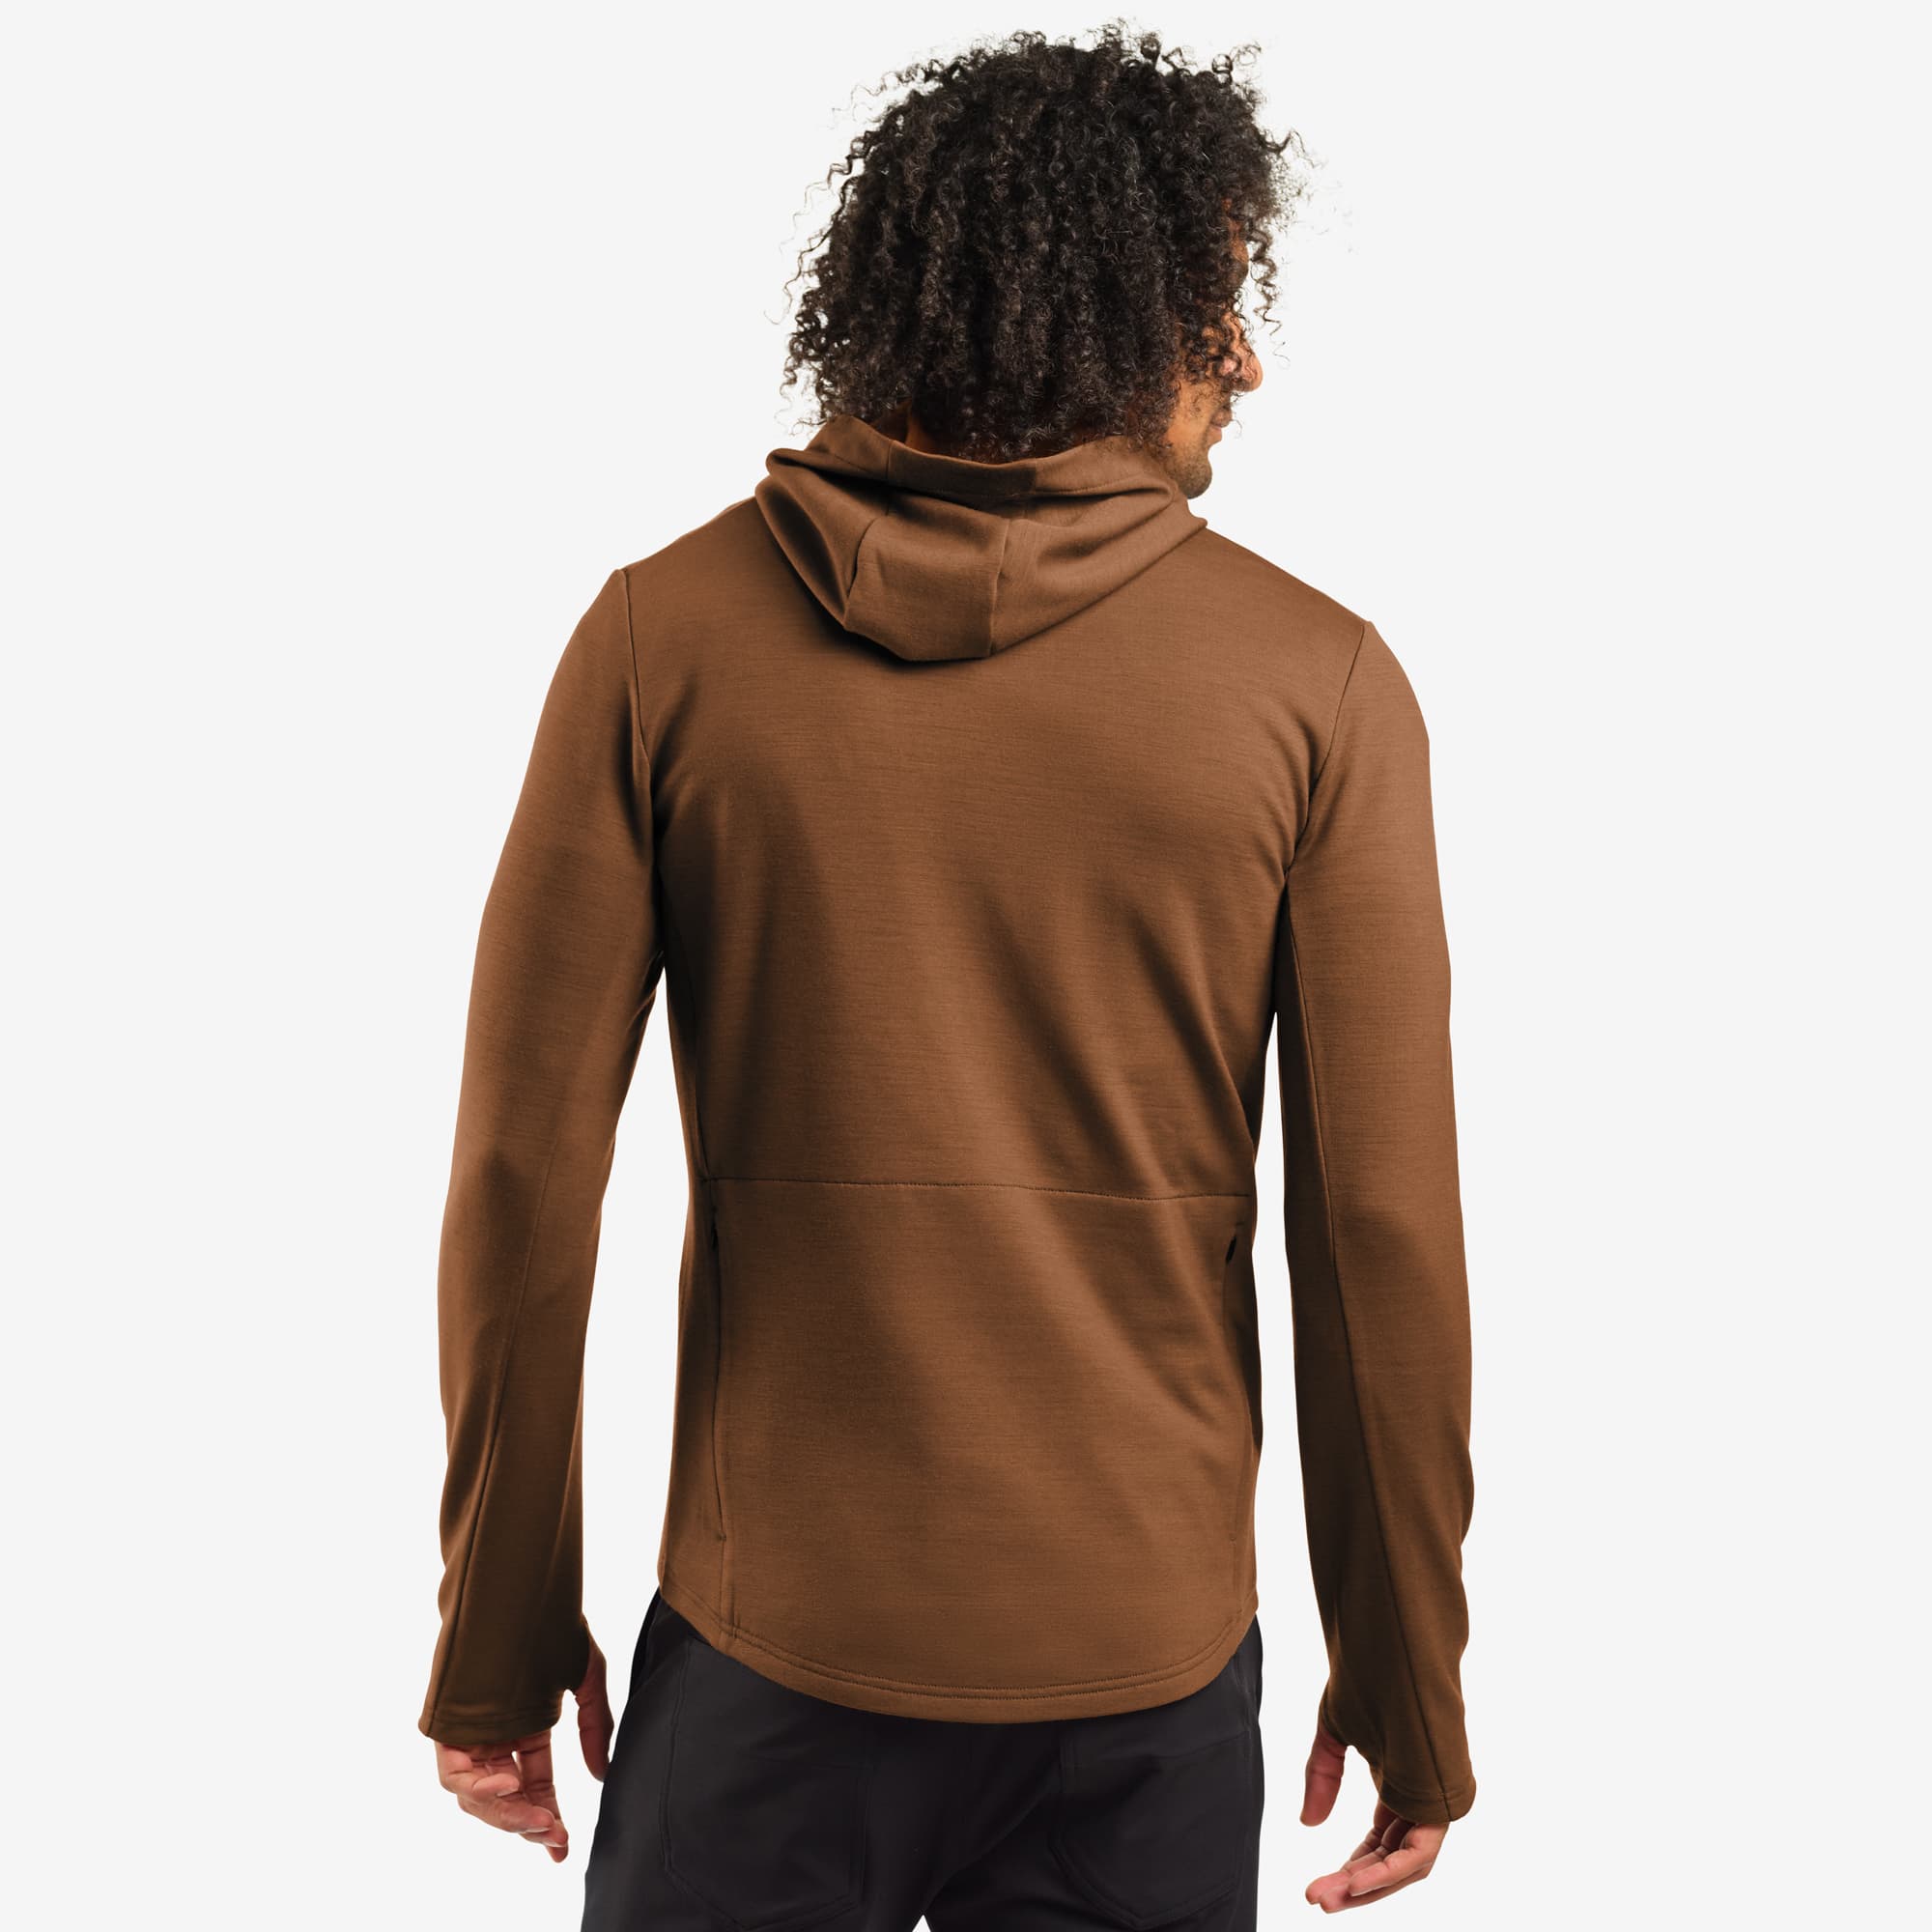 Men's merino blend hoodie in brown worn by a man back view #color_monks robe